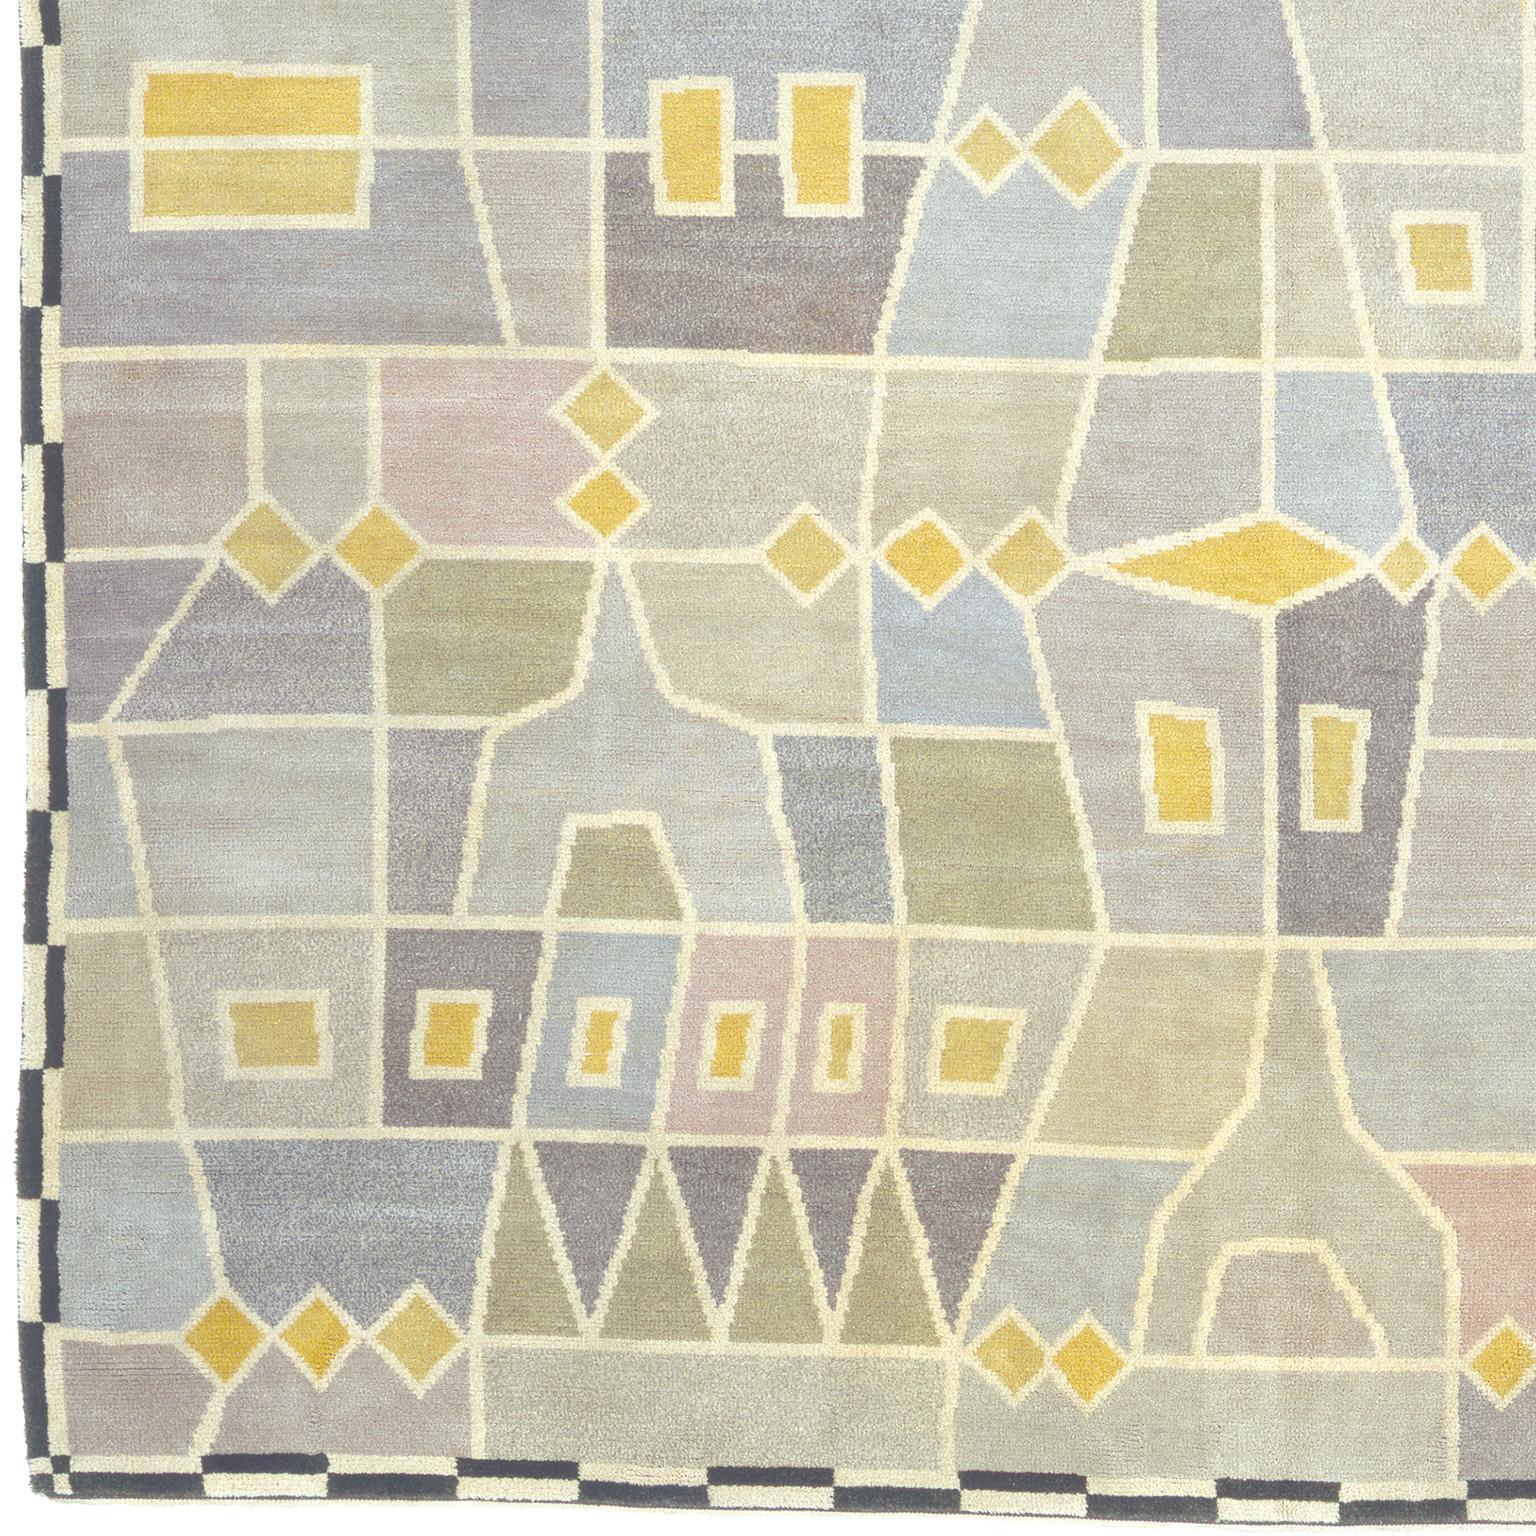 Swedish Pile rug by Edna Martin
Sweden circa 1950
Handwoven
Provenance: Dag Hammarskjold's private residence, NY.